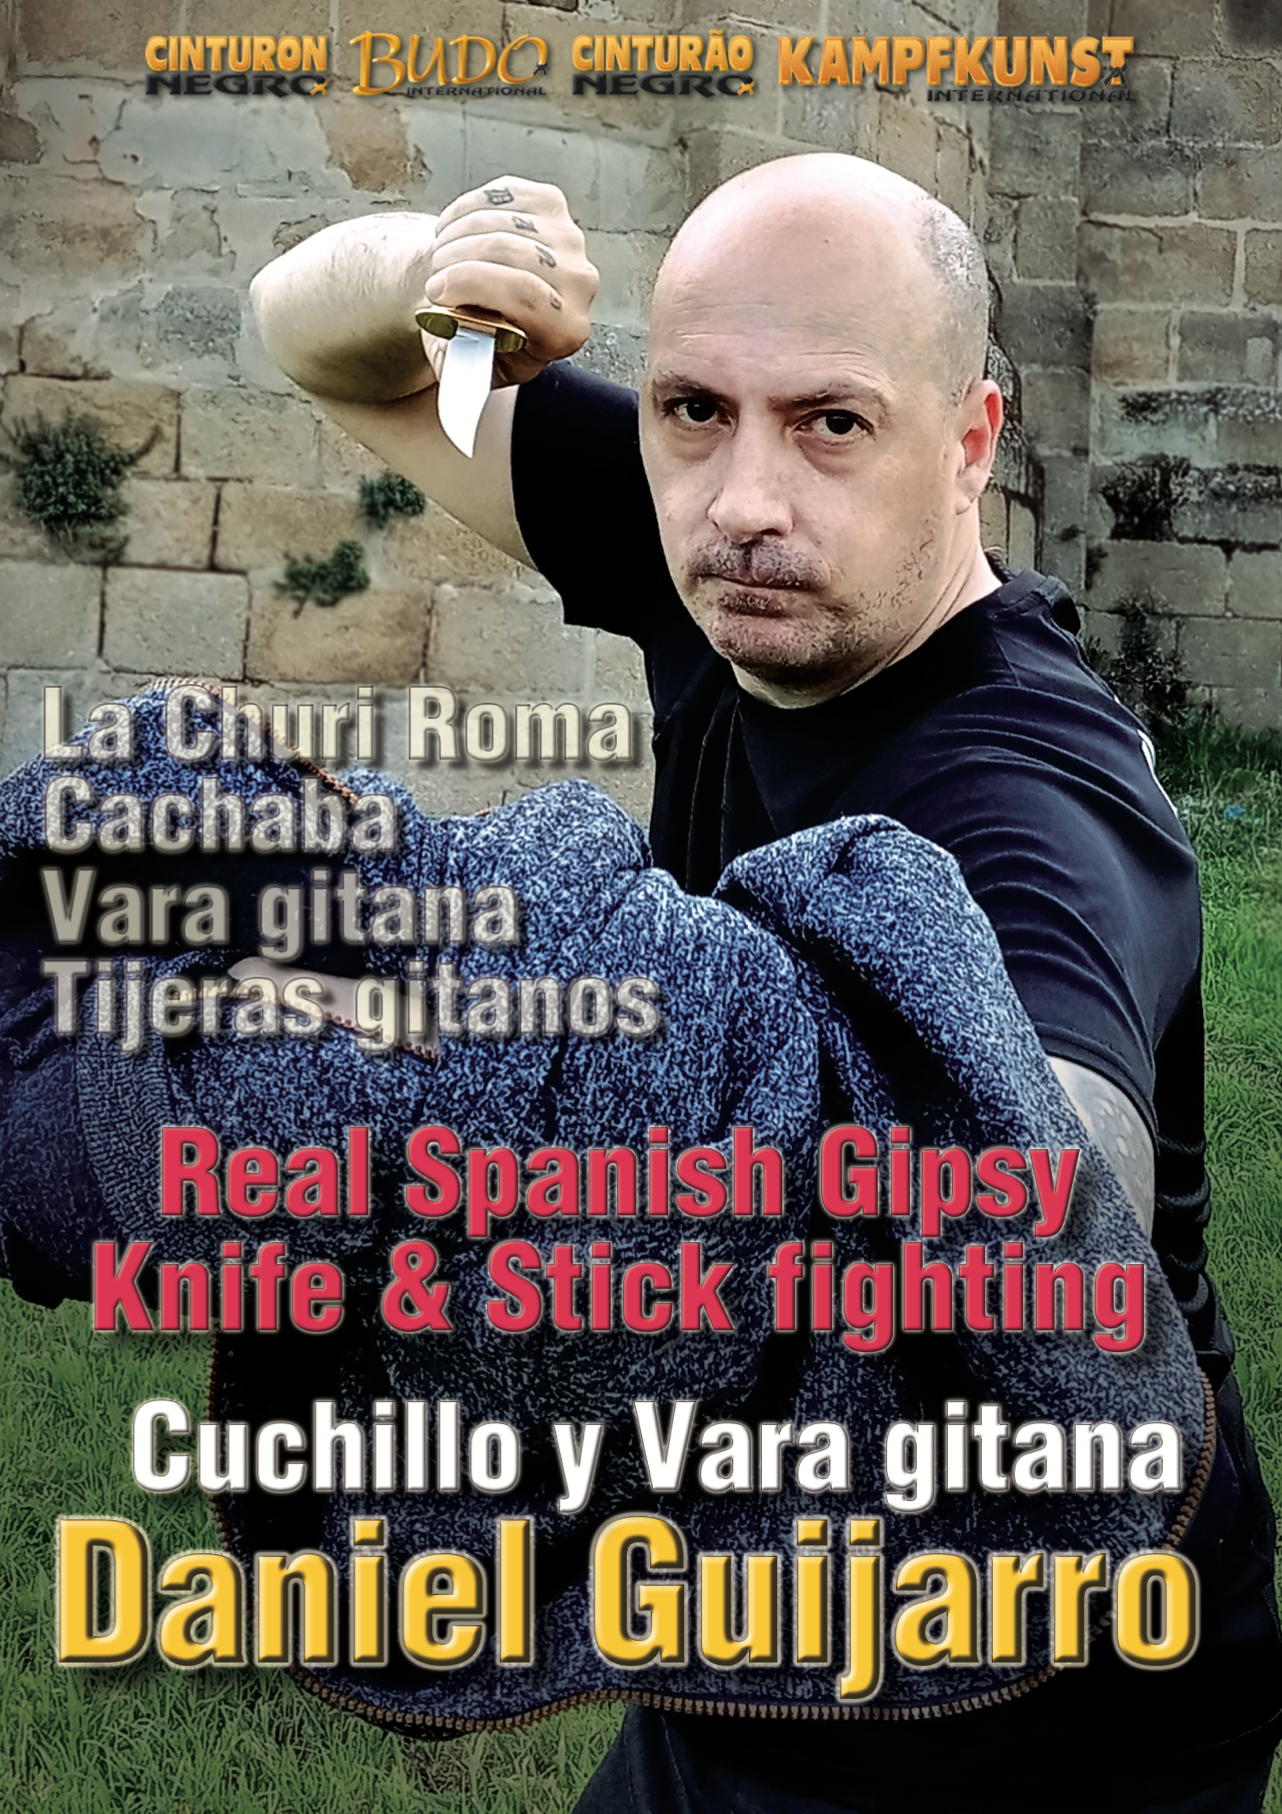 Real Spanish Gypsy Knife & Stick Fighting DVD by Daniel Guijarro - Budovideos Inc